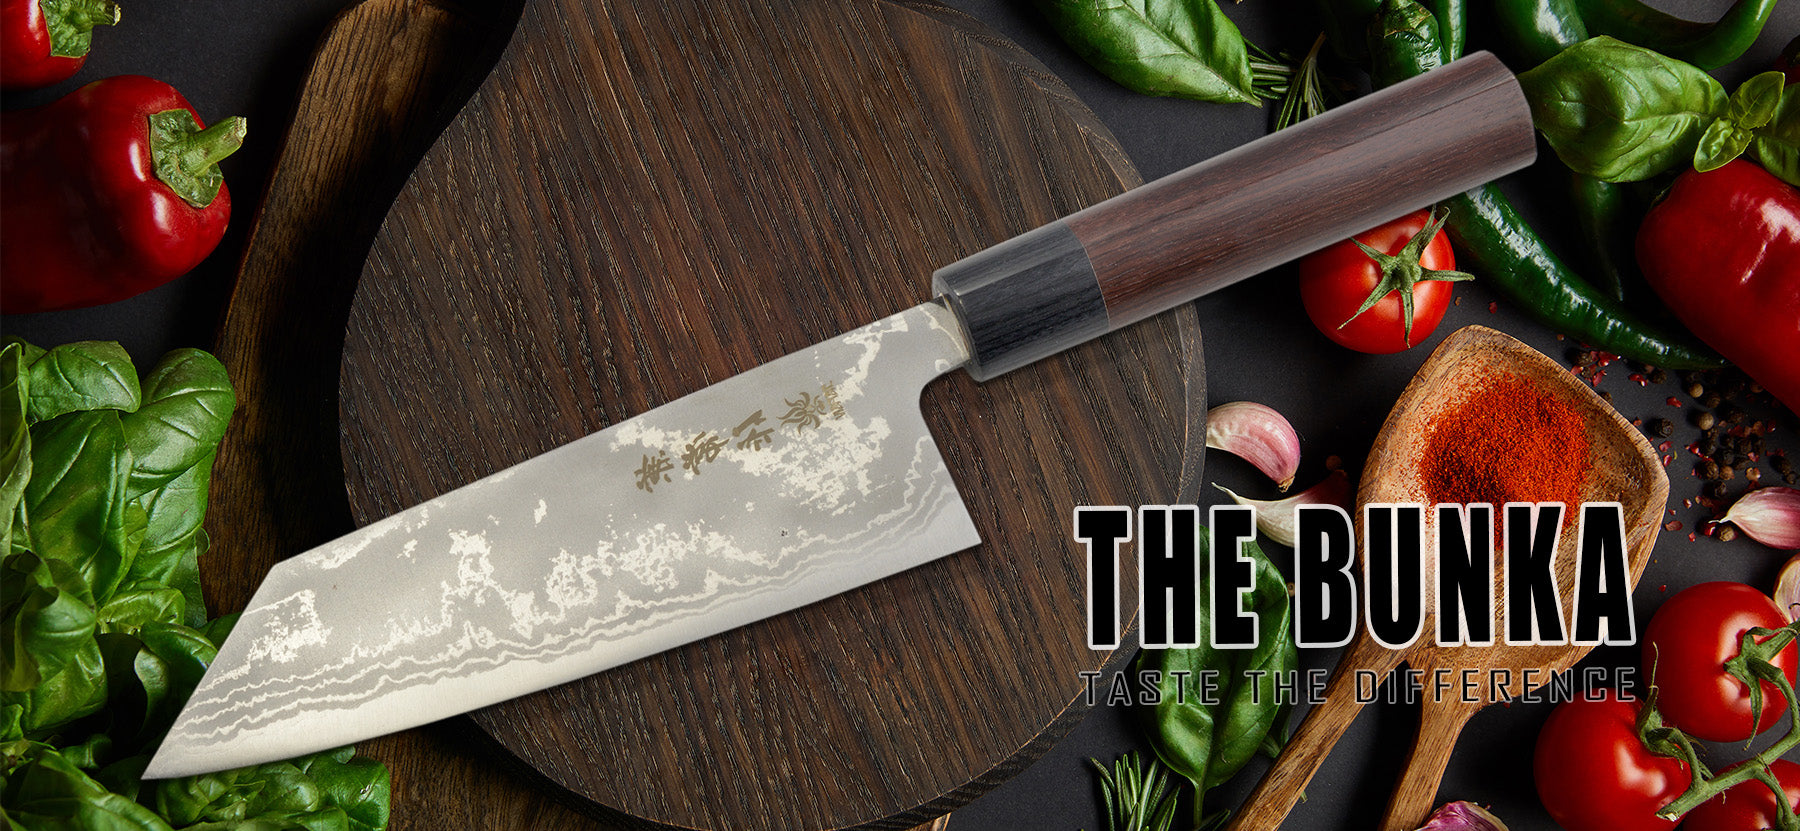 A japanese kitchen knife called the bunka